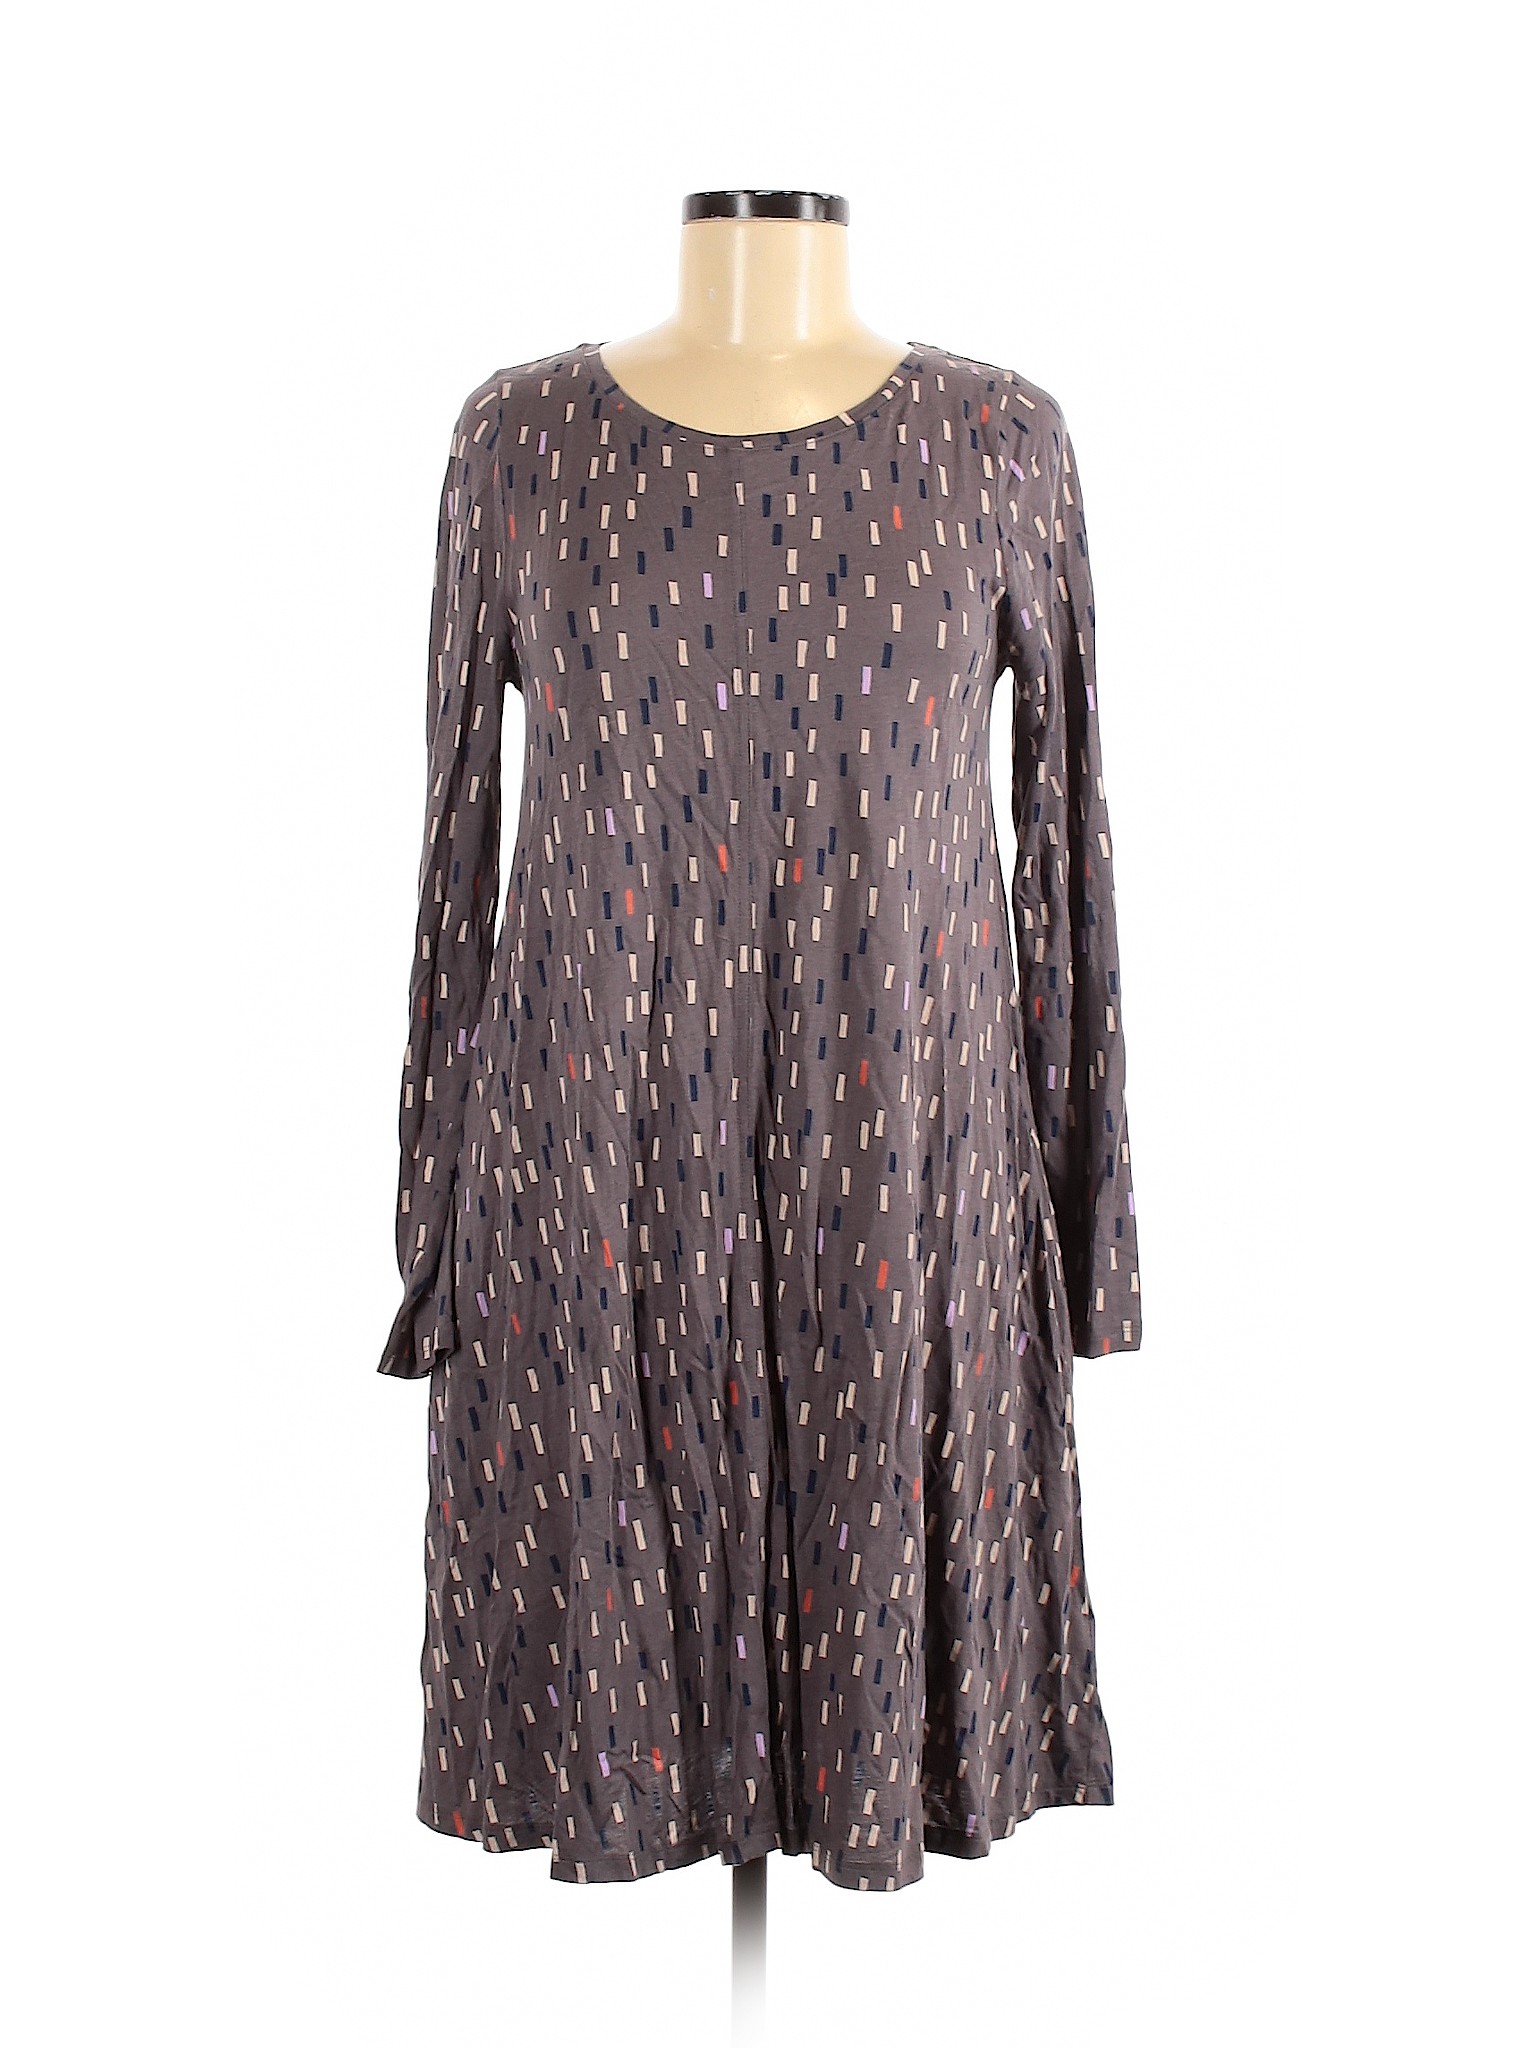 Boden Women Gray Casual Dress 4 | eBay